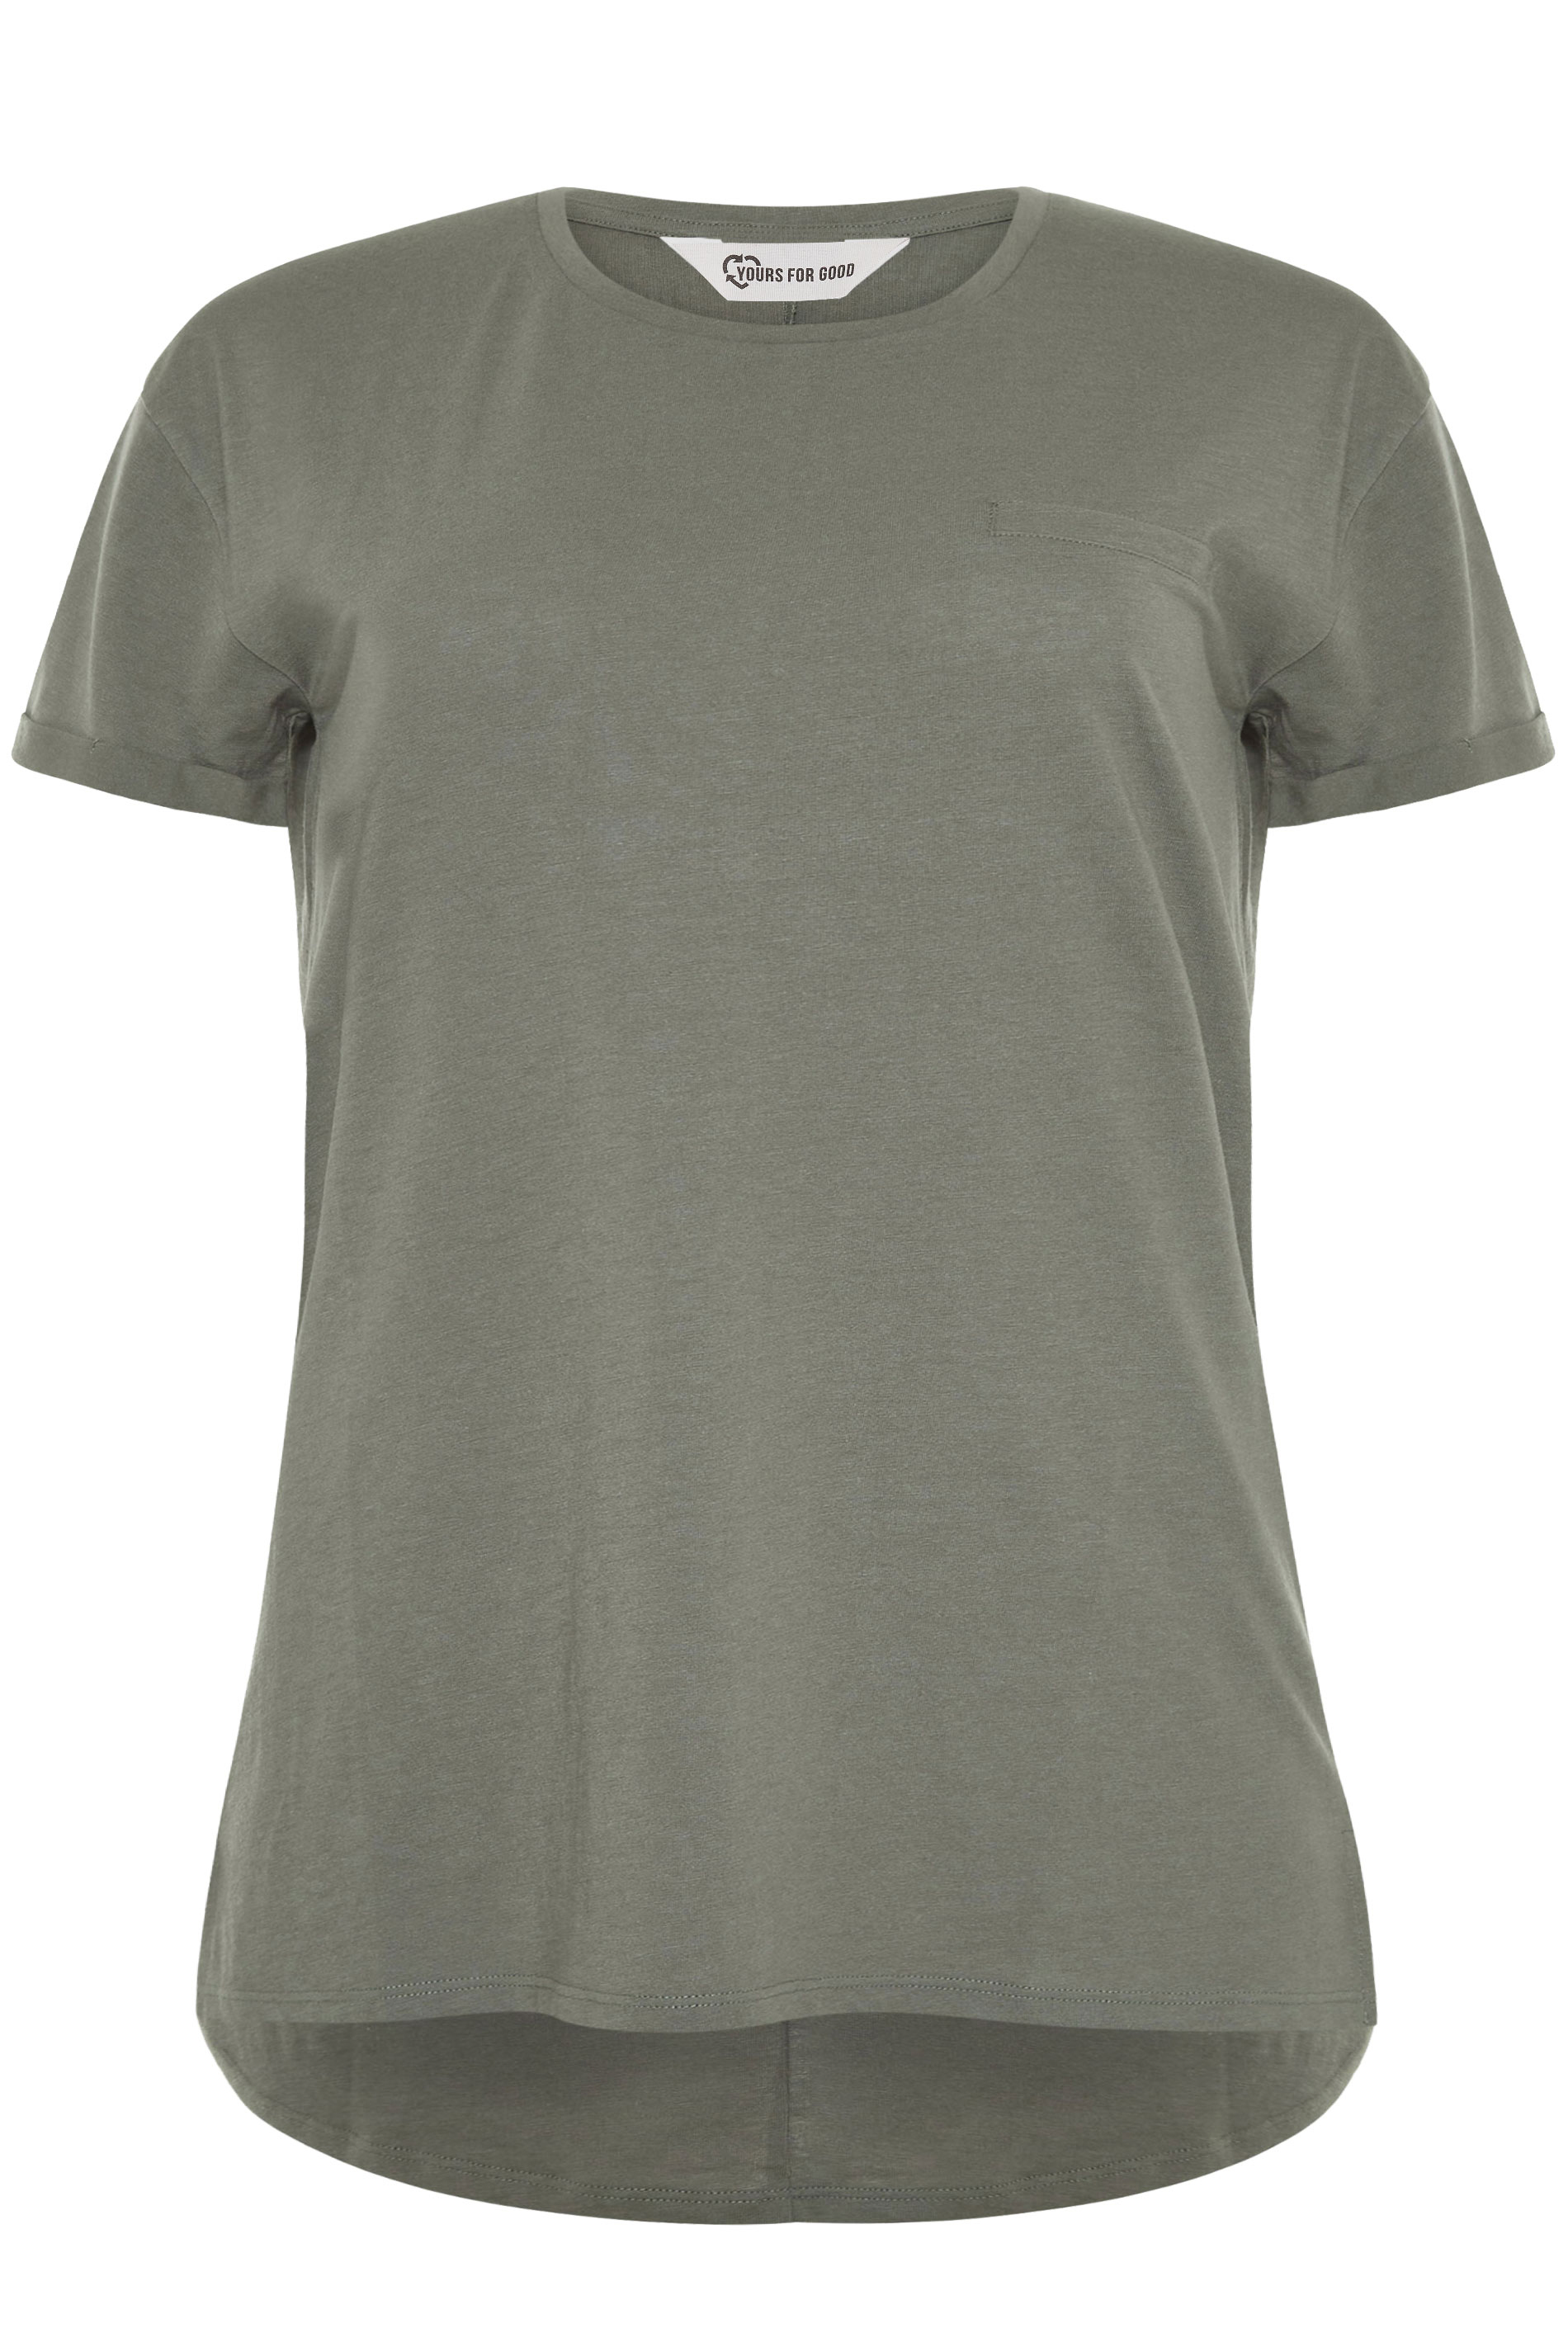 Grande taille  Tops Grande taille  Tops Casual | SUSTAINABLE - T-Shirt Vert Kaki Bio à Poche - XC07702